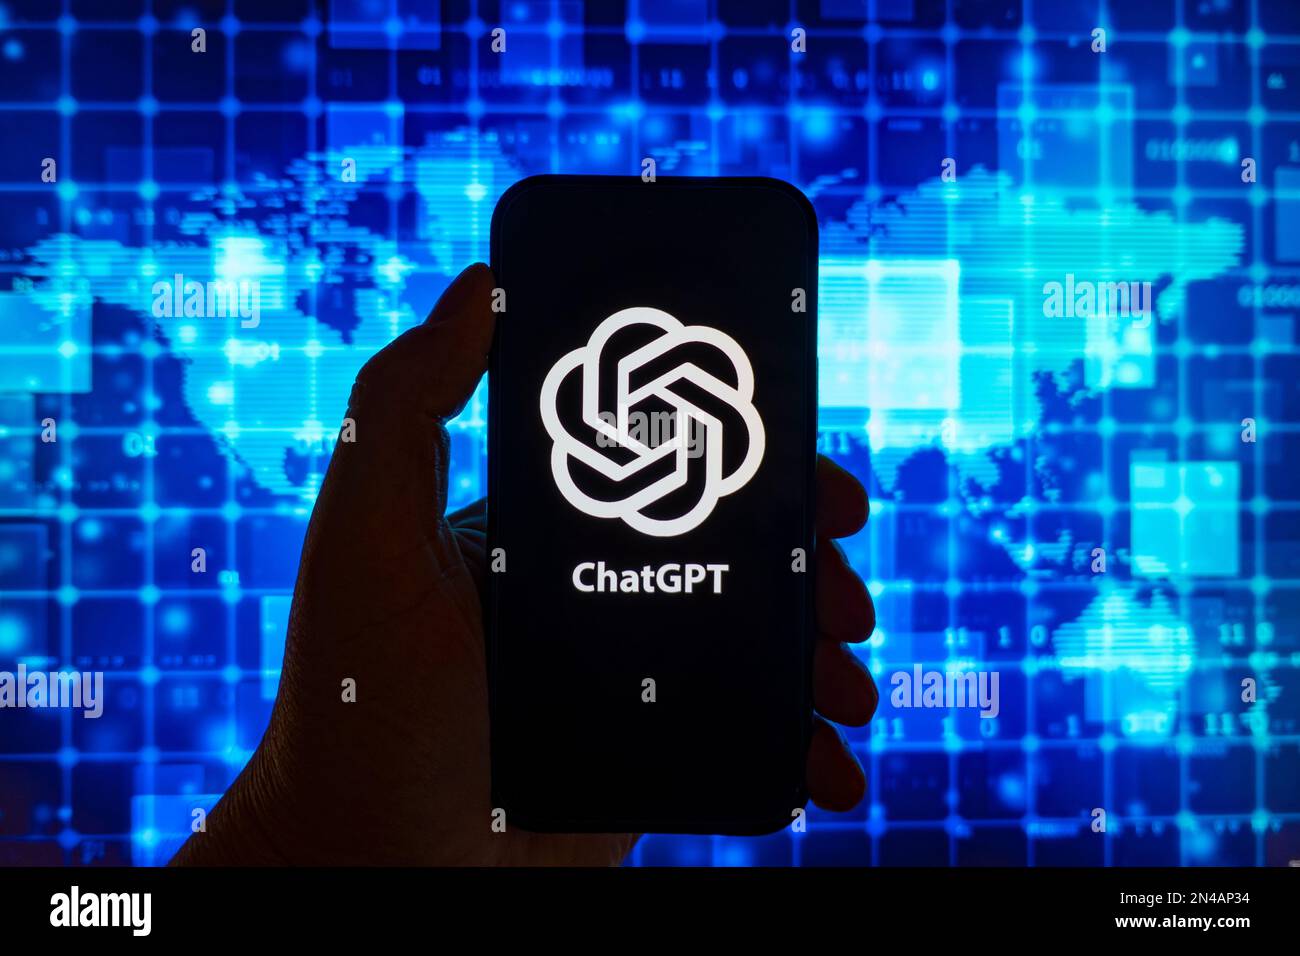 Digitales zusammengesetztes Bild des OpenAI ChatGPT-Chatbot-Logos auf dem Mobiltelefon Stockfoto